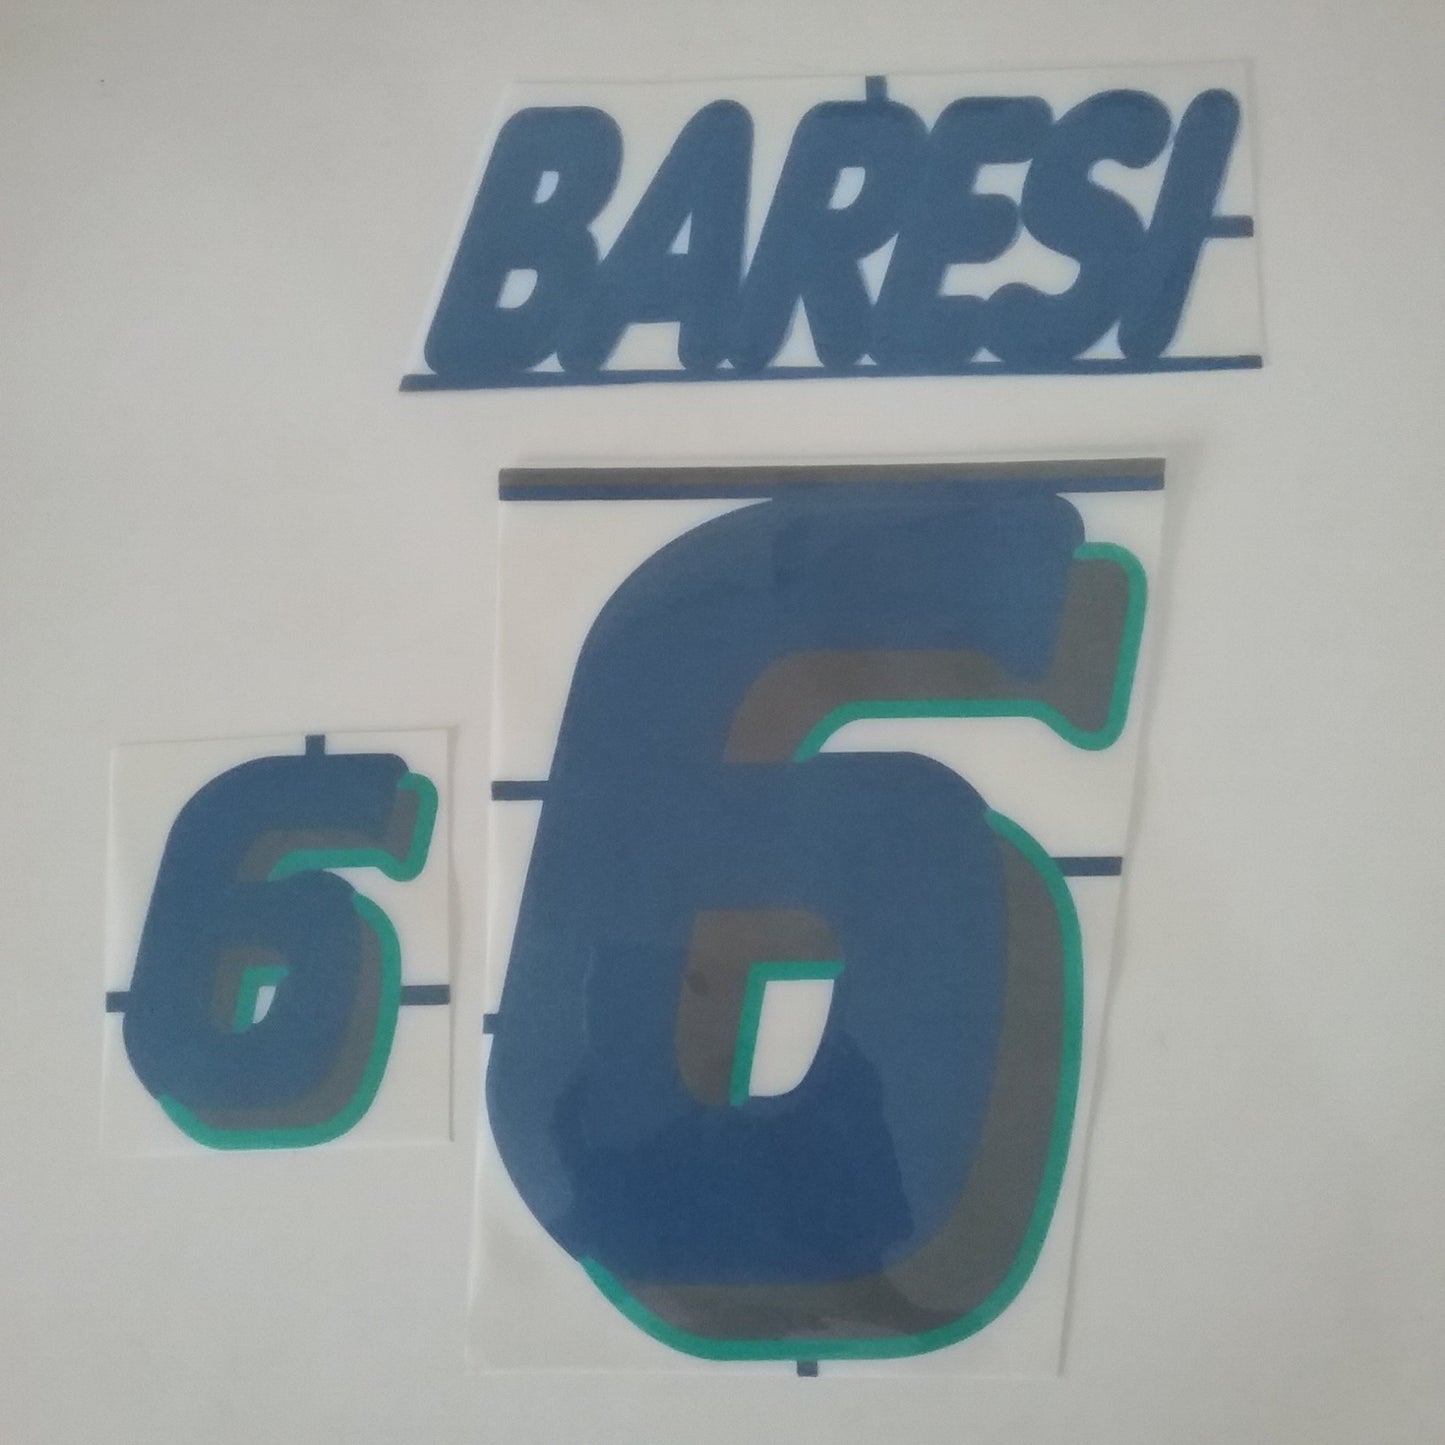 1994 Baresi Italy Away Nameset